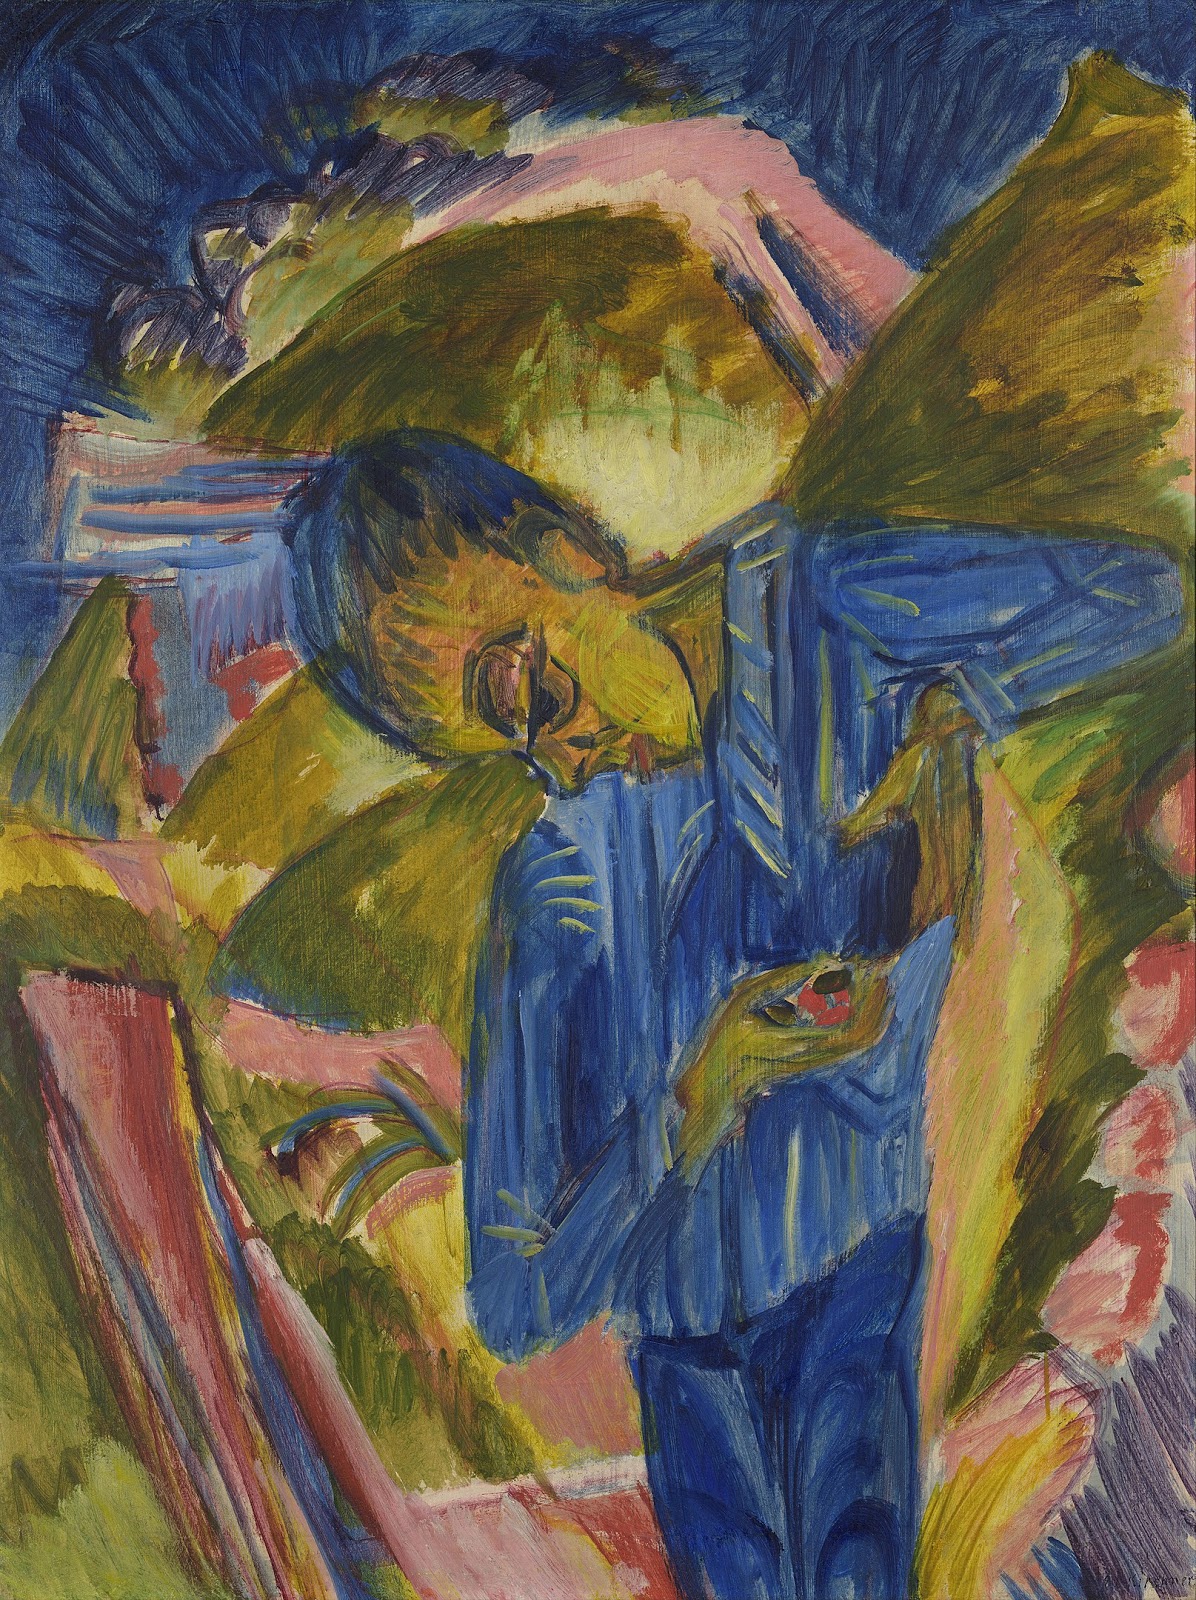 Ernst Ludwig Kirchner (18801938) Expressionist painter